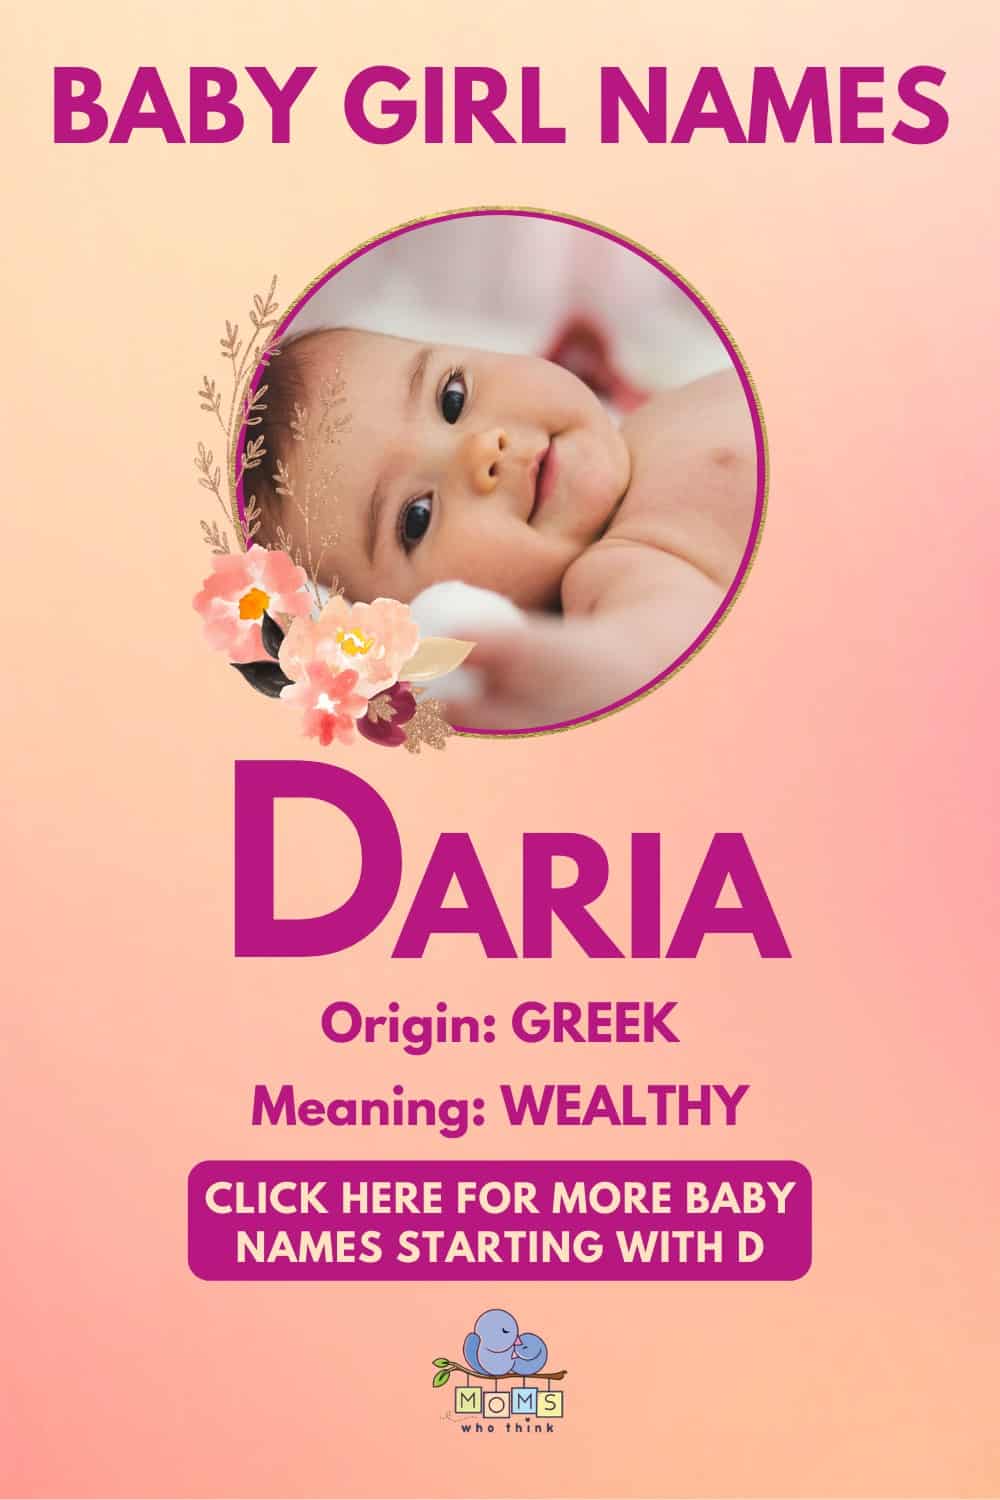 Baby girl name meanings - Daria